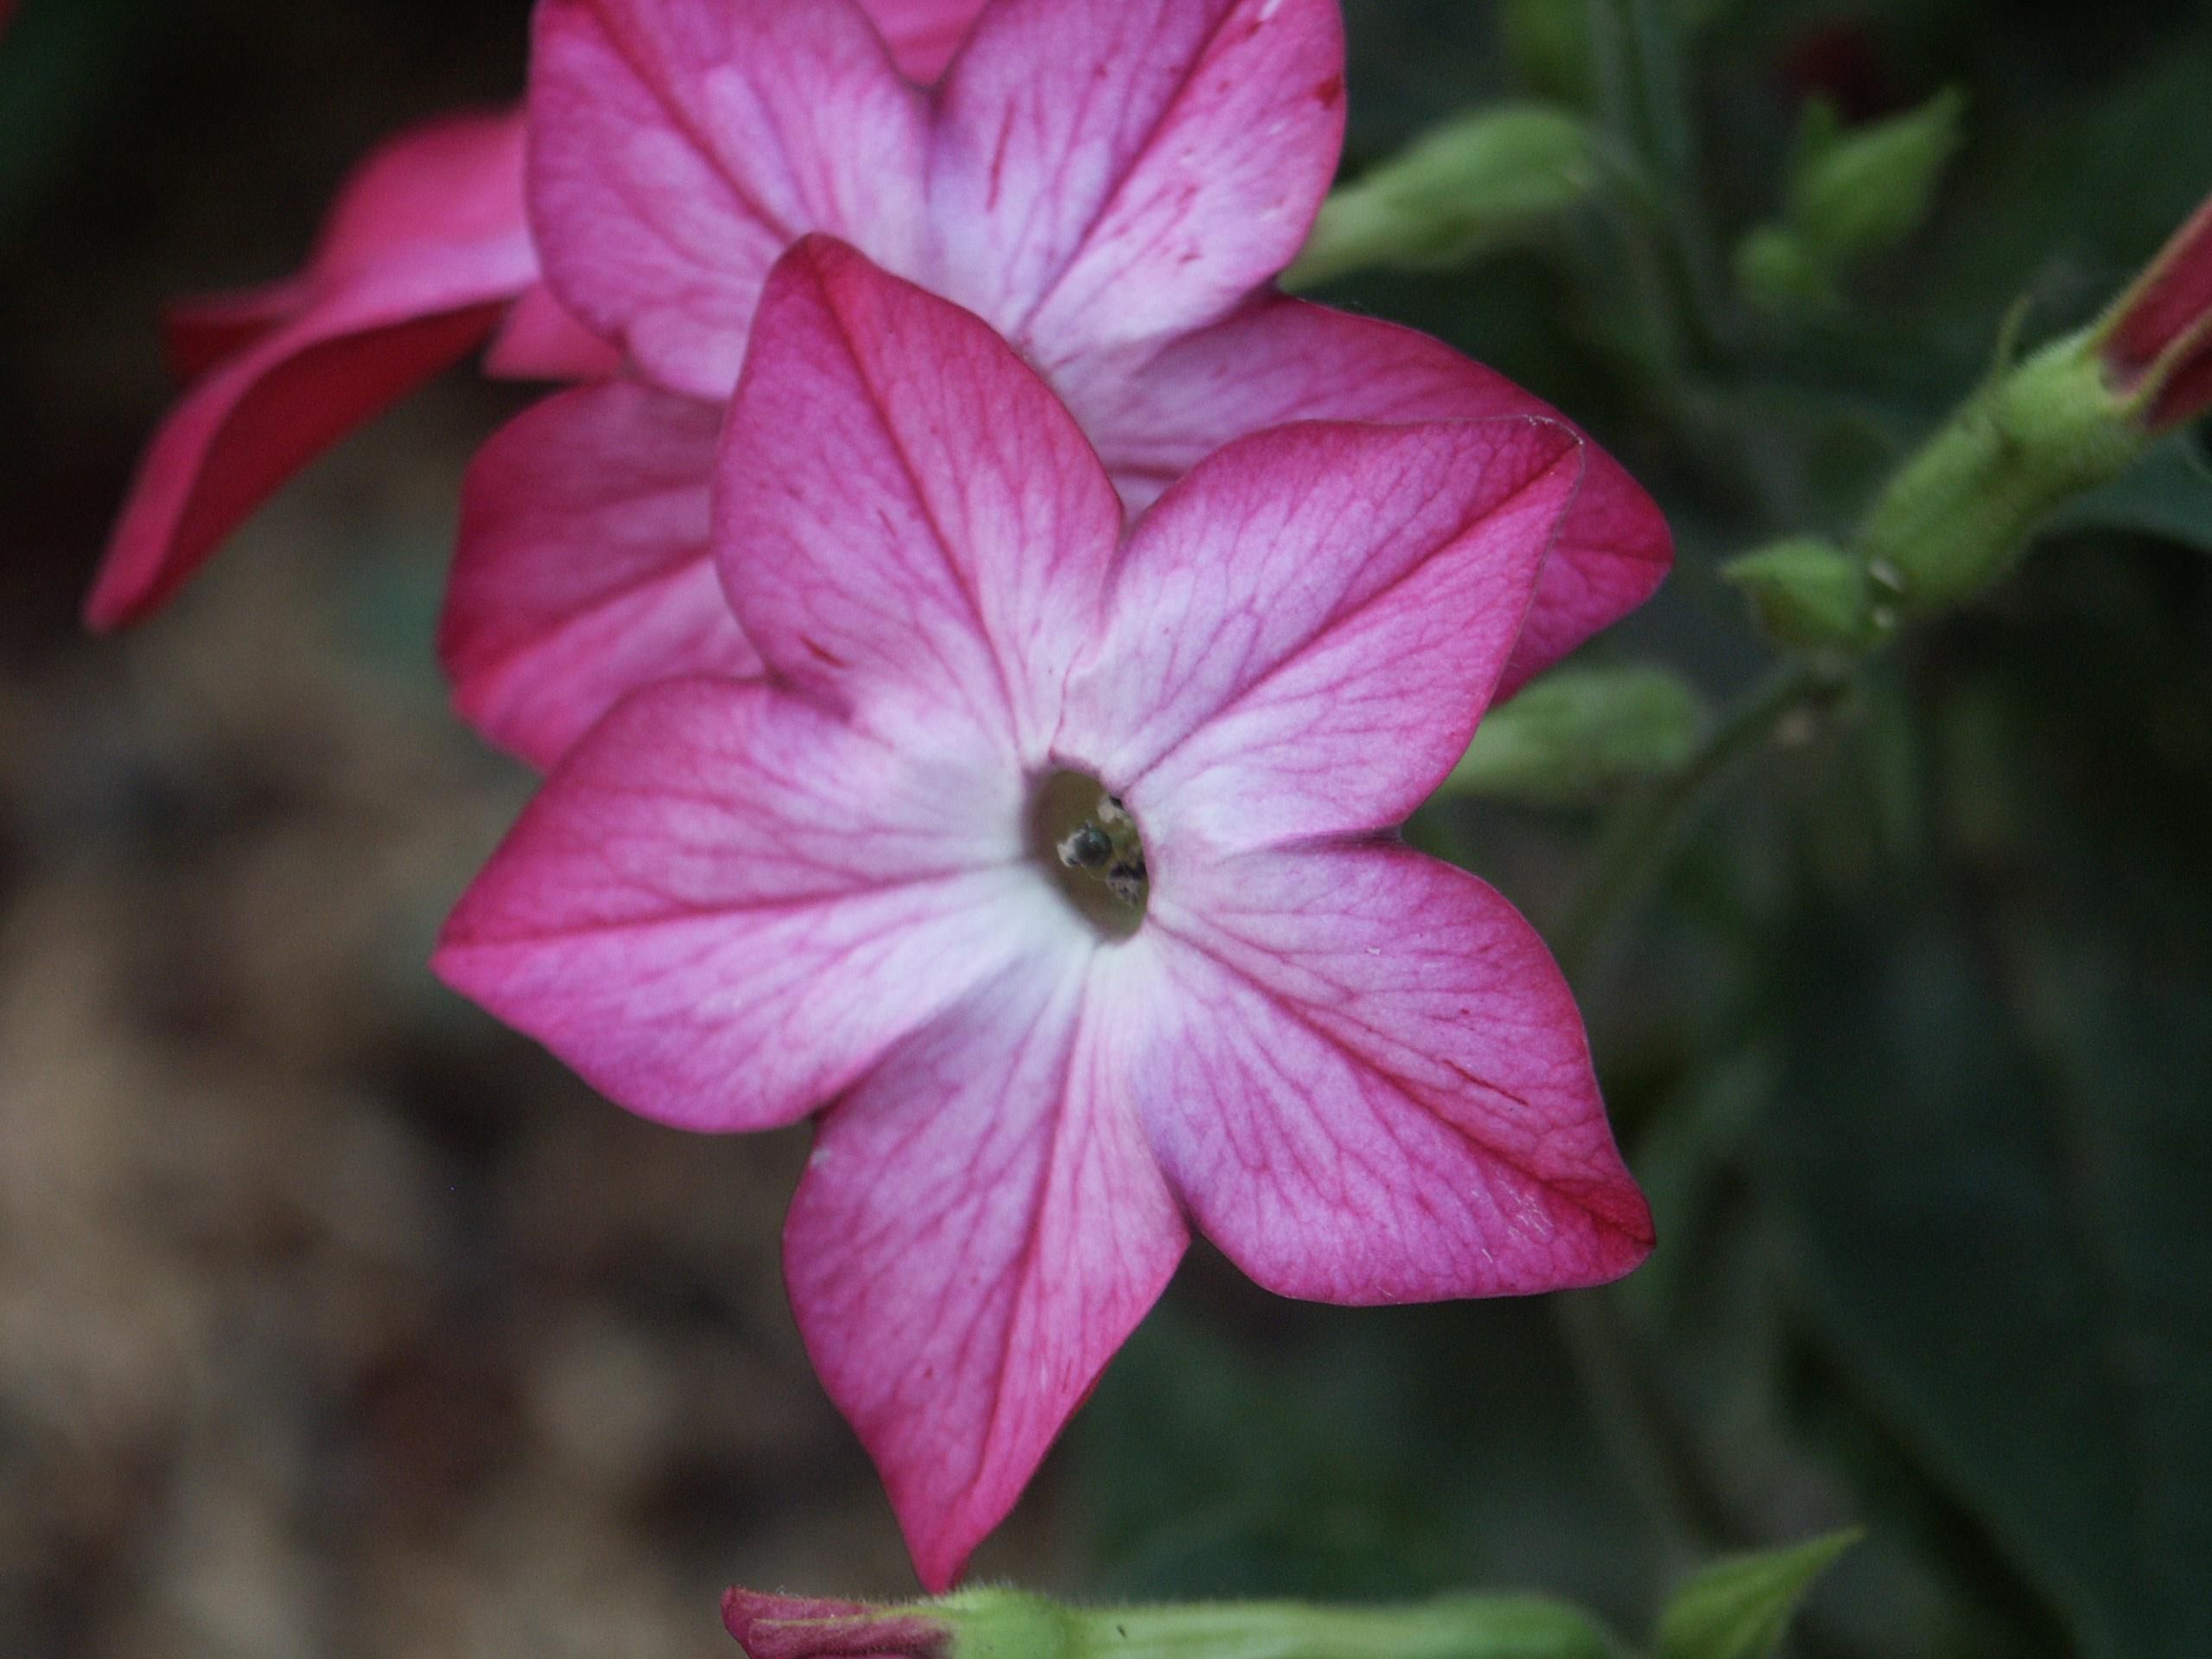 Flower close up photo